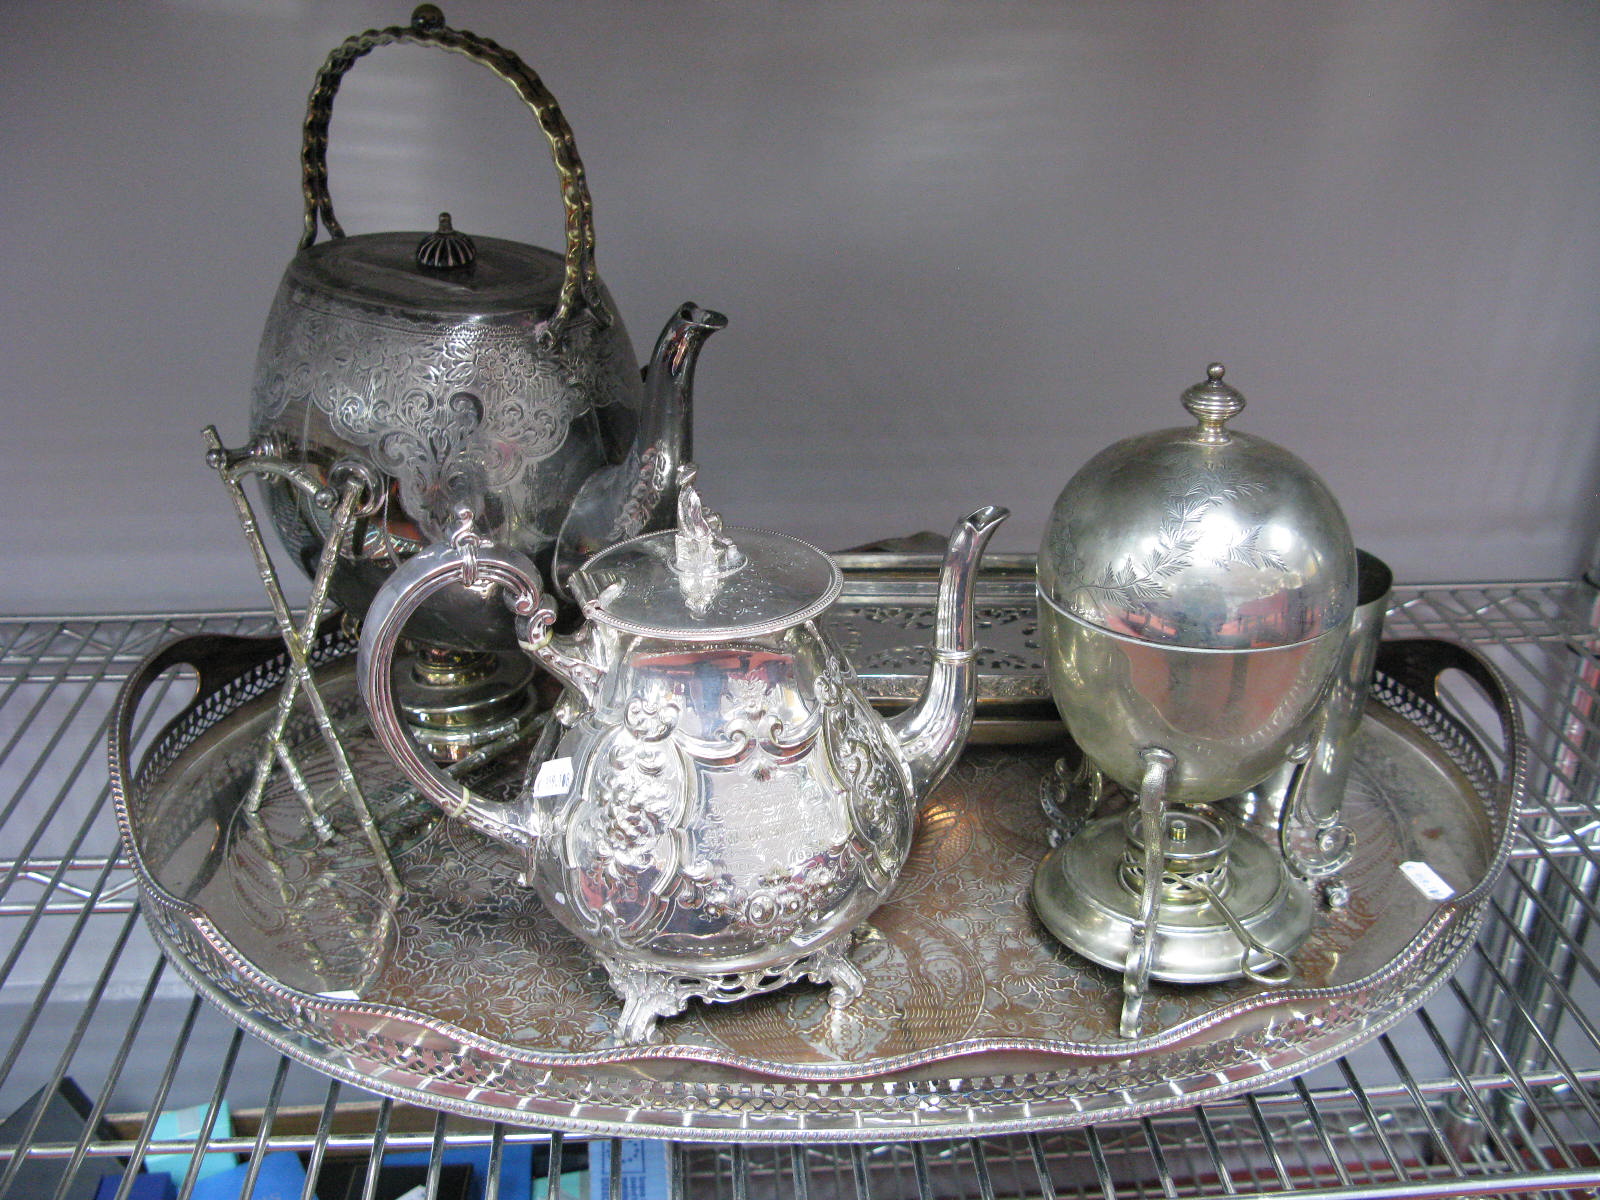 A Decorative Tea Pot, "Presented to Joseph Longden by his employer Mr. W.M. Harrison on the